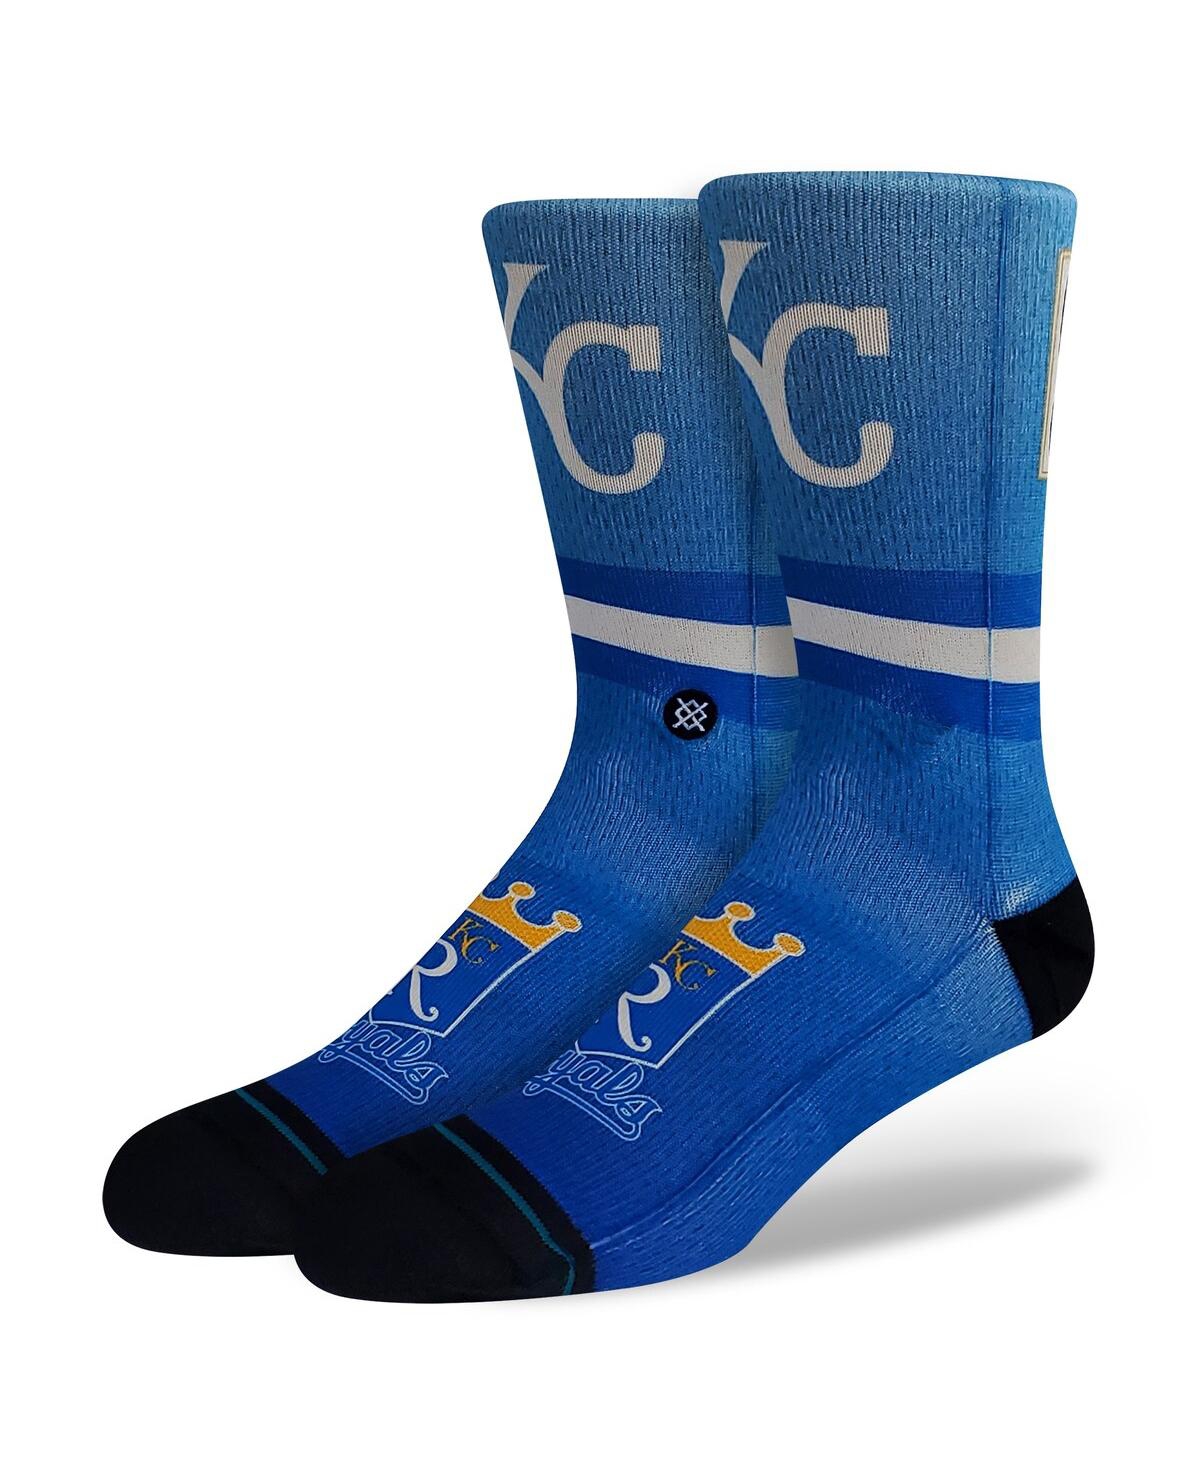 Men's Stance Kansas City Royals Cooperstown Collection Crew Socks - Multi